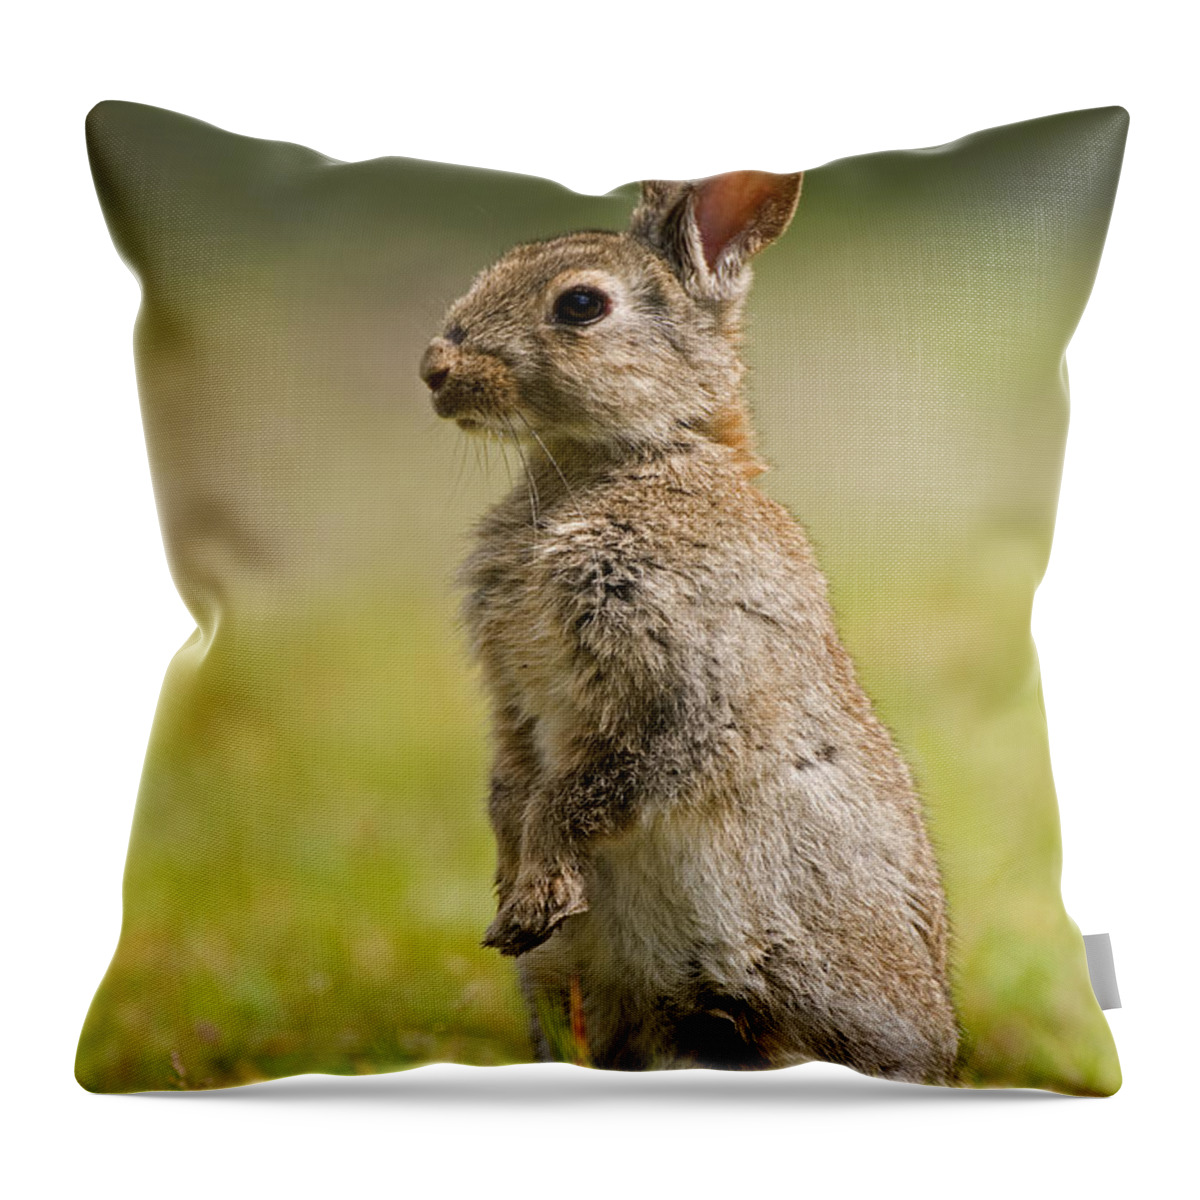 Fn Throw Pillow featuring the photograph European Rabbit Oryctolagus Cuniculus by Marcel van Kammen